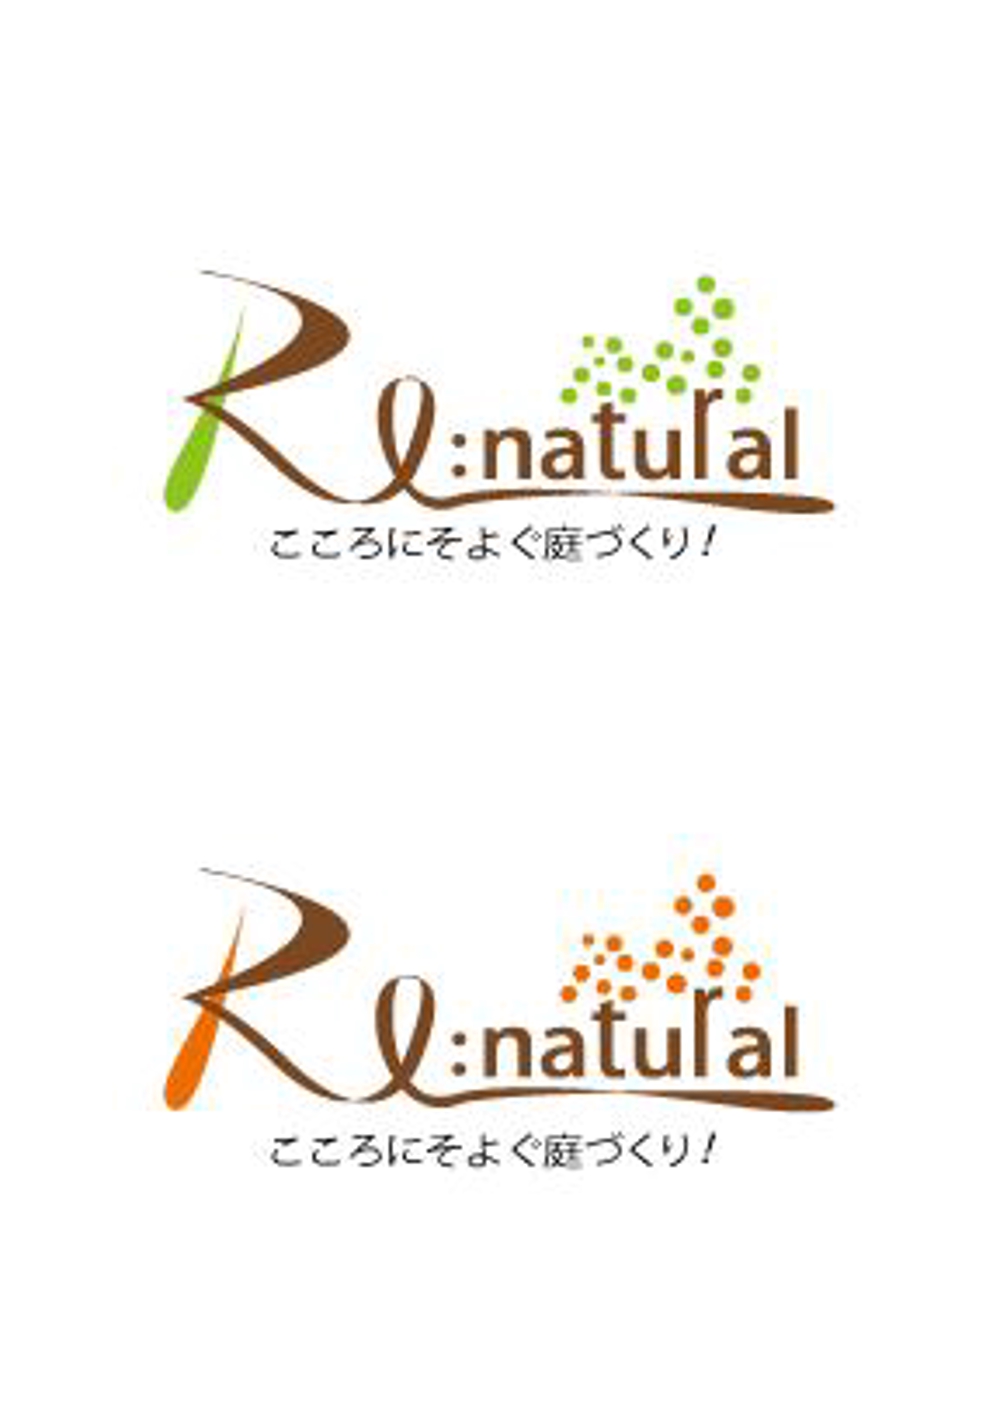 Re-natural201@.jpg